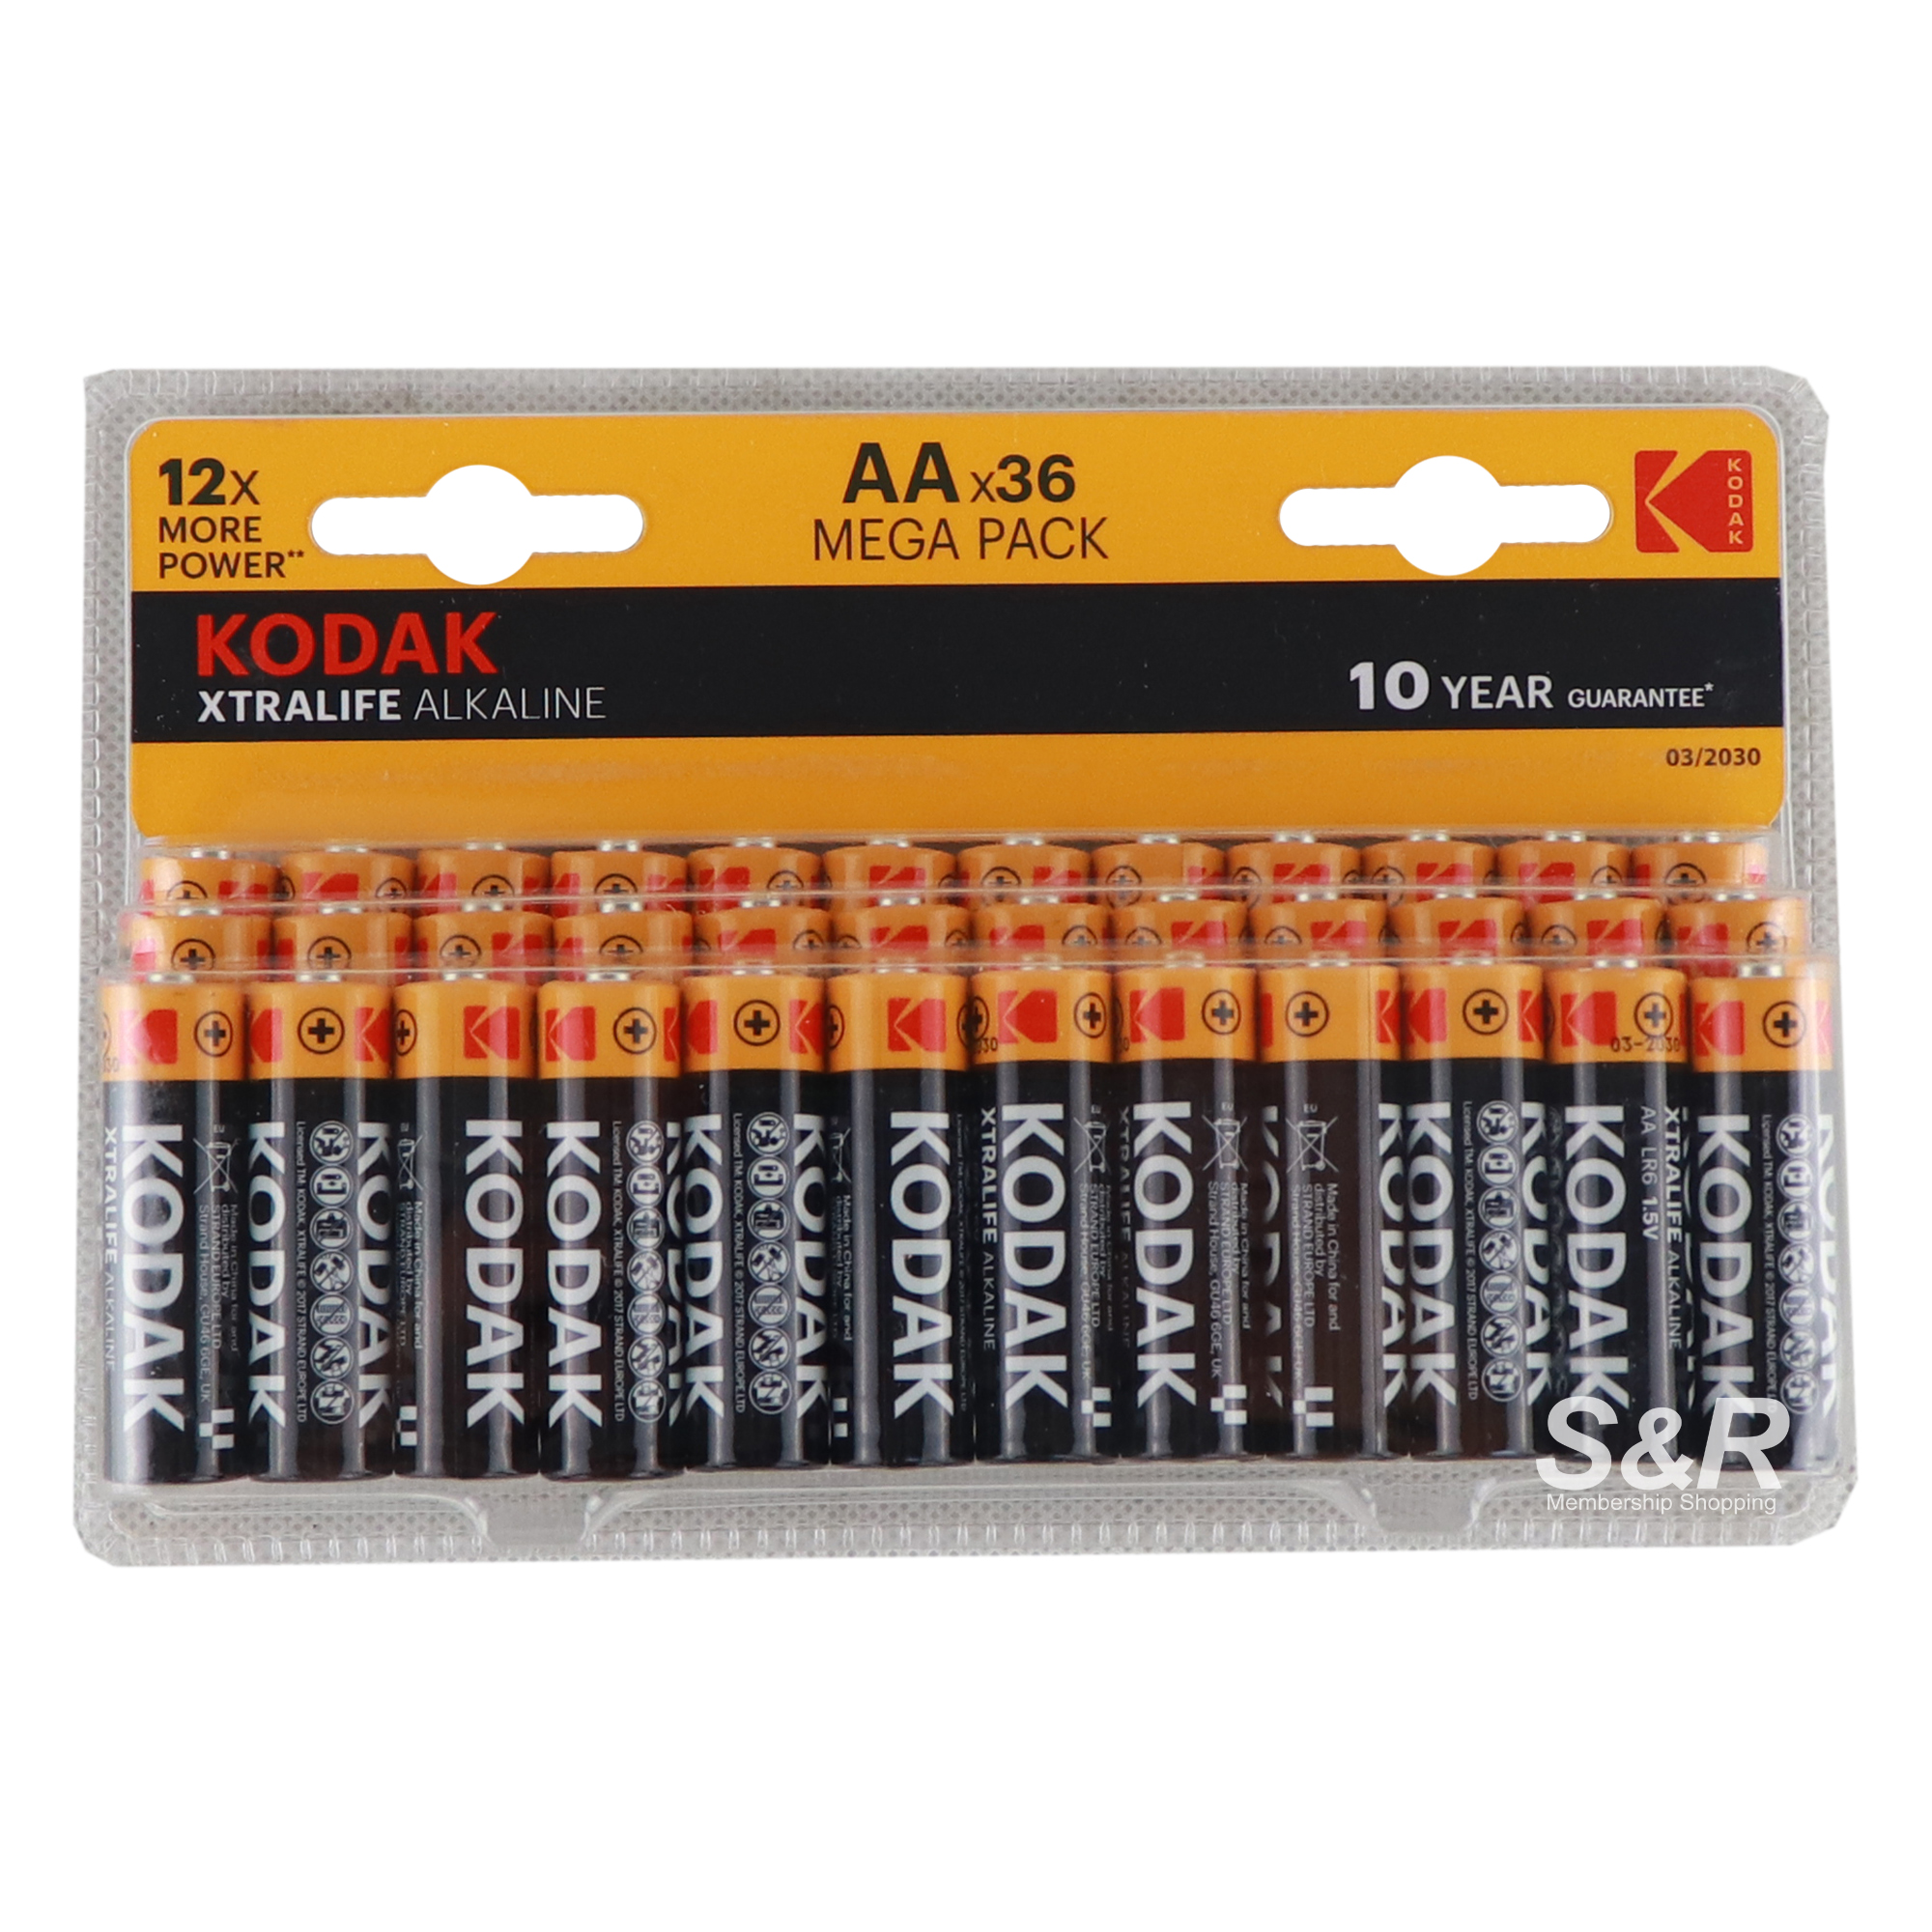 Kodak Xtralife Alkaline Megapack AA Batteries 36pcs